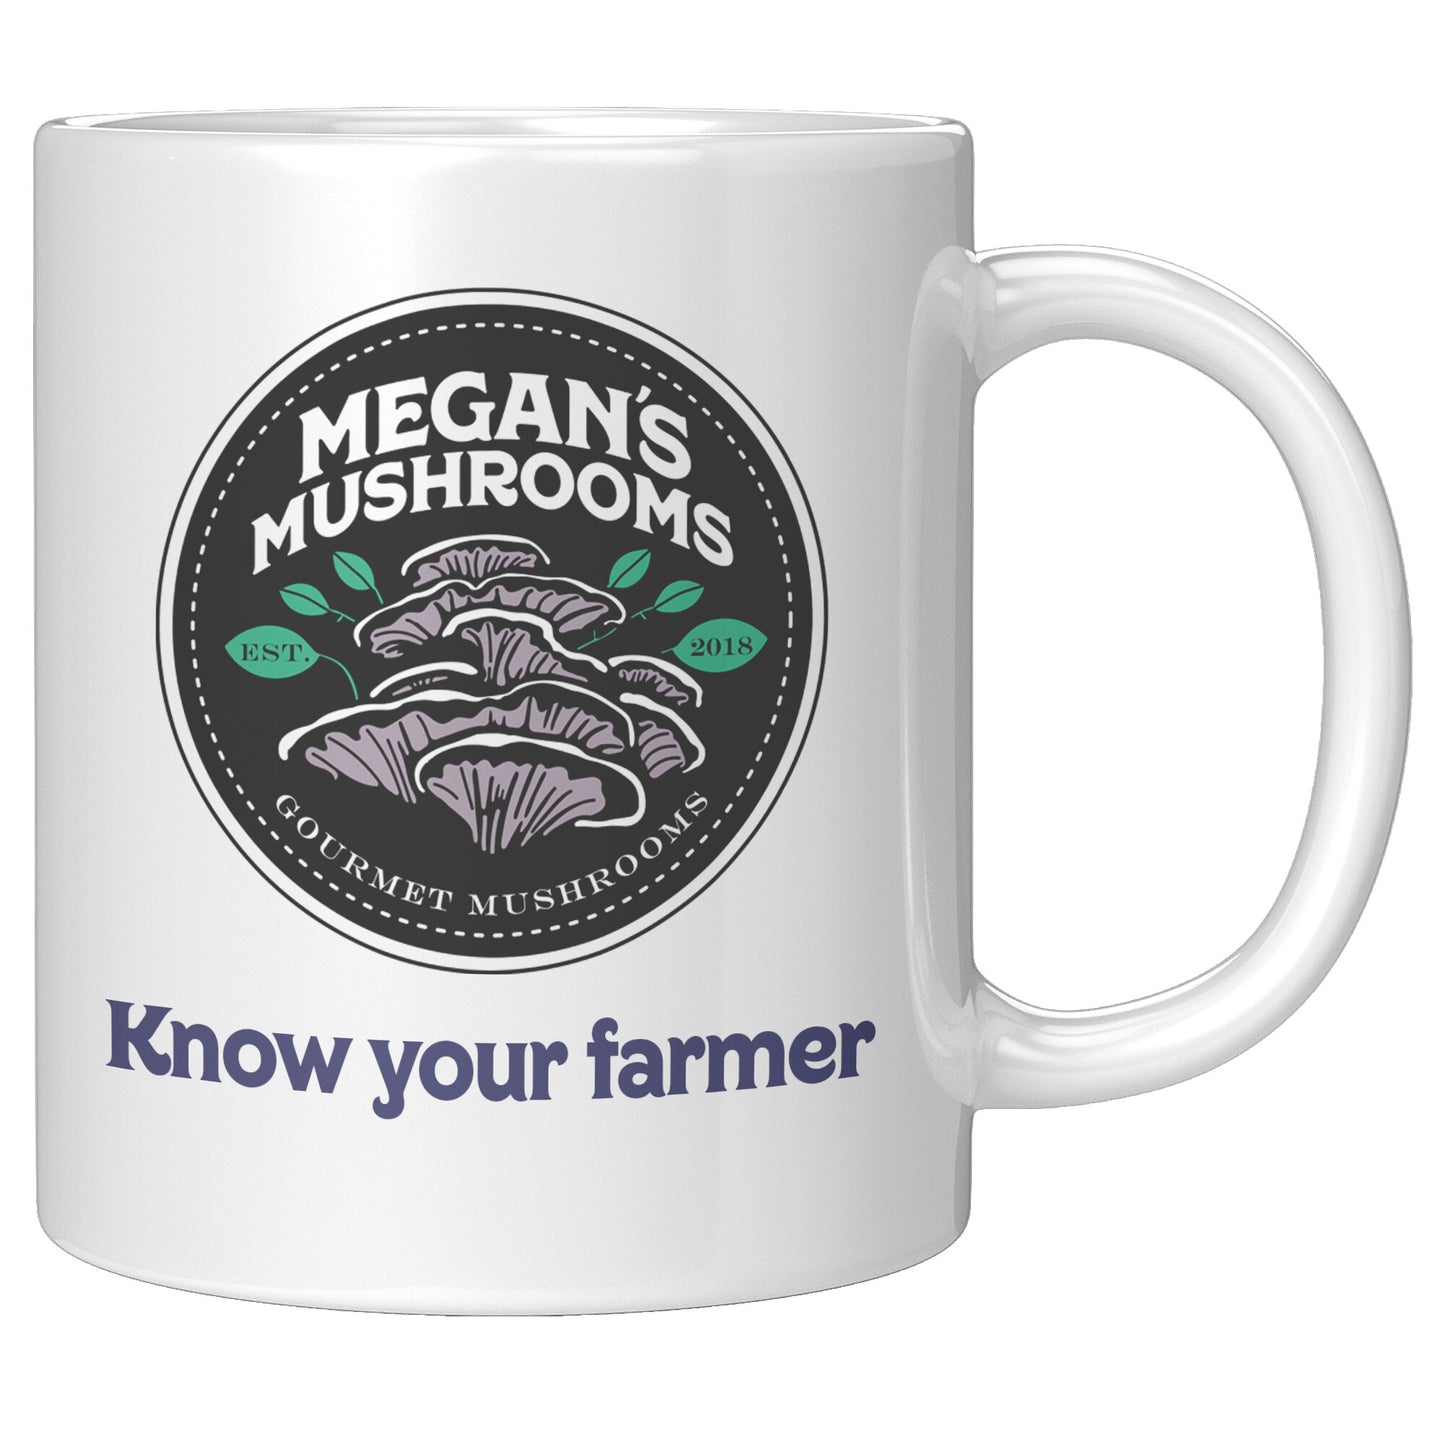 Know your farmer mug